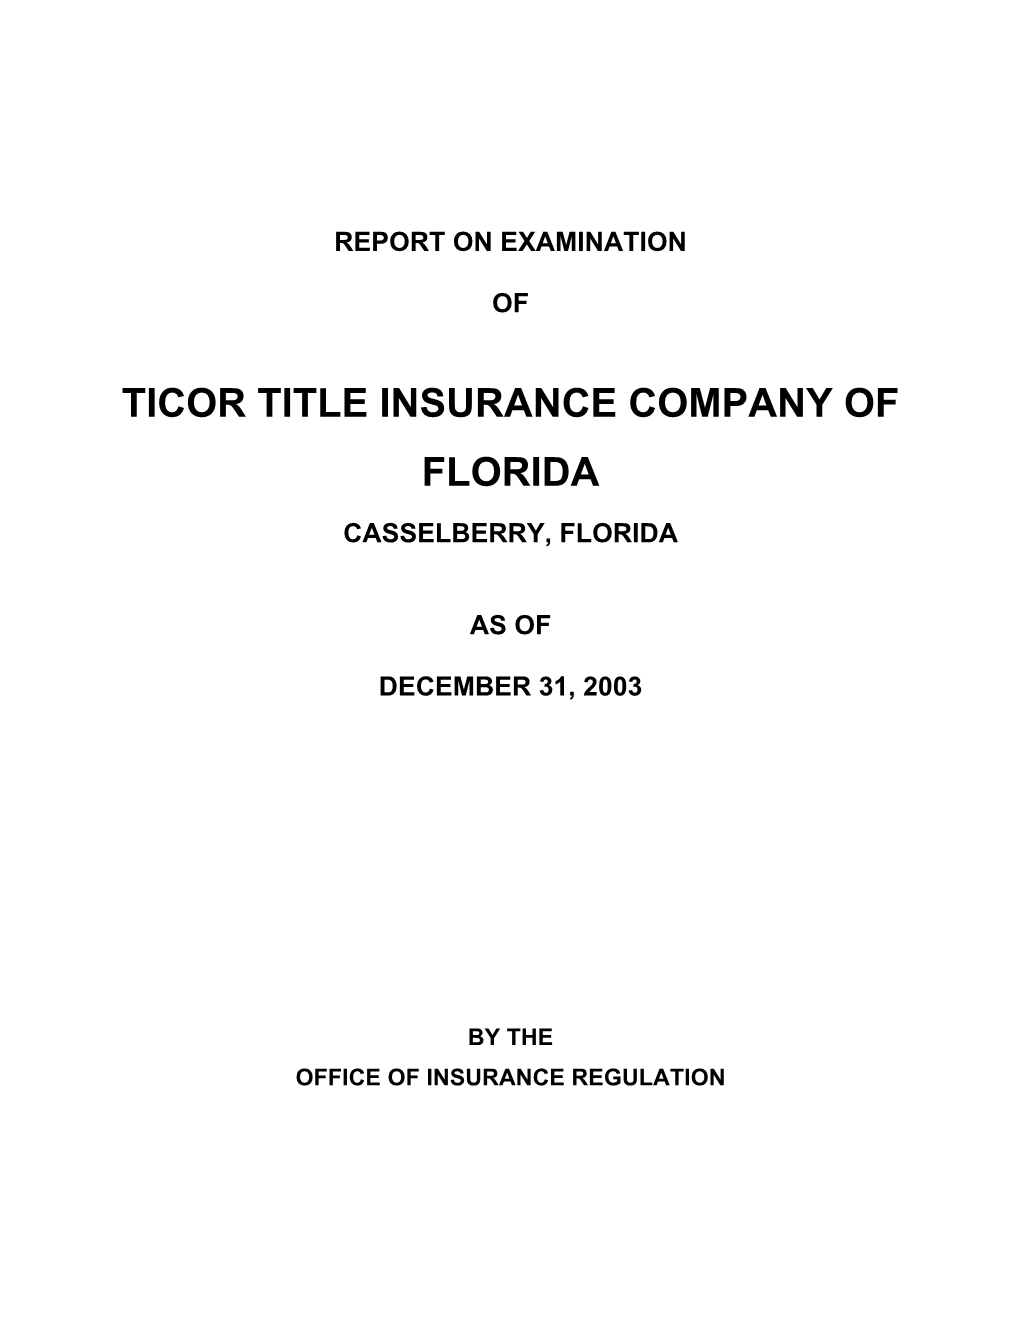 Ticor Title Insurance Company of Florida